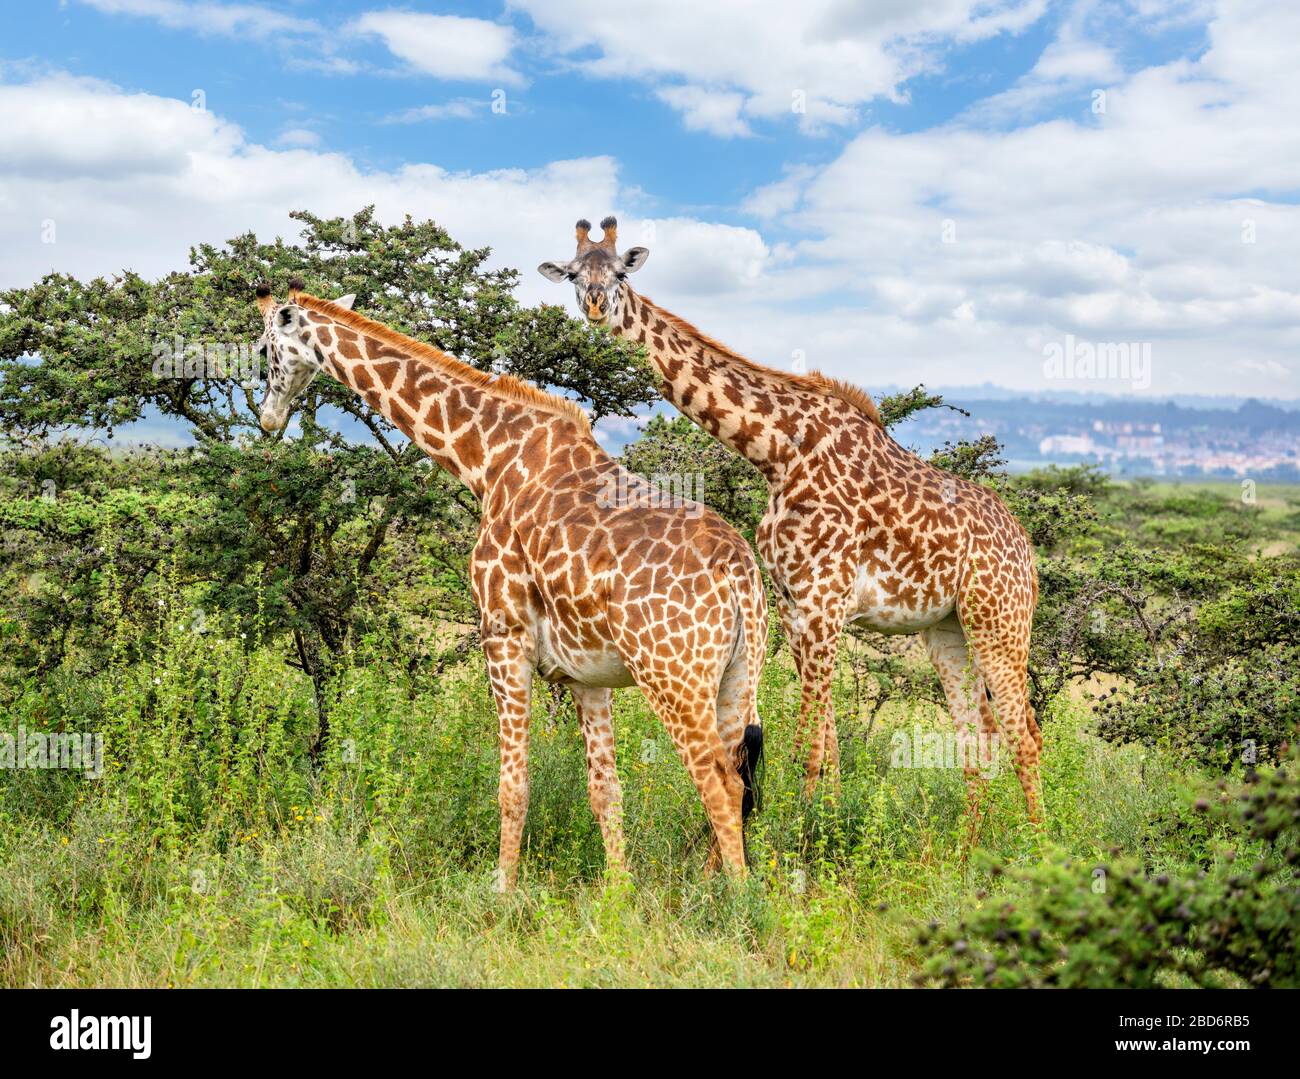 Masai giraffe (Giraffa camelopardalis tippelskirchii). Coppia di giraffe che nutrono nel Parco Nazionale di Nairobi, Kenya, Africa Orientale Foto Stock